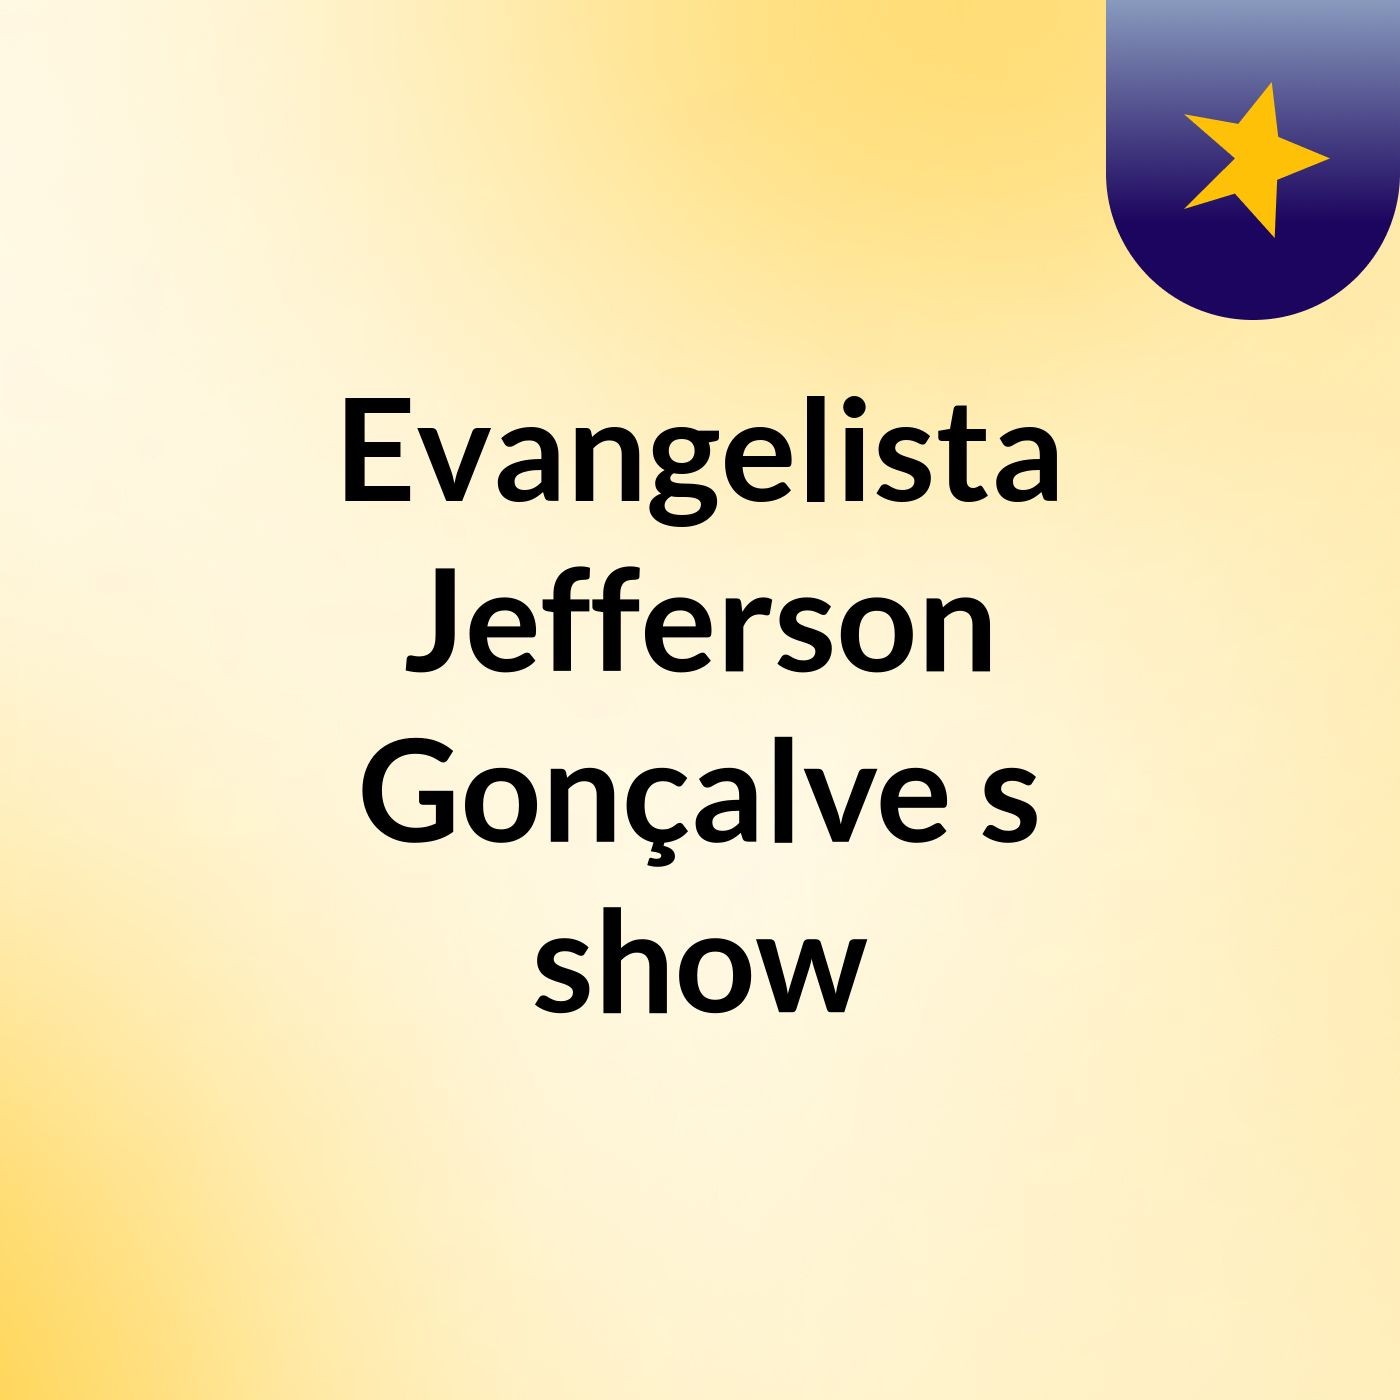 Evangelista Jefferson Gonçalve's show